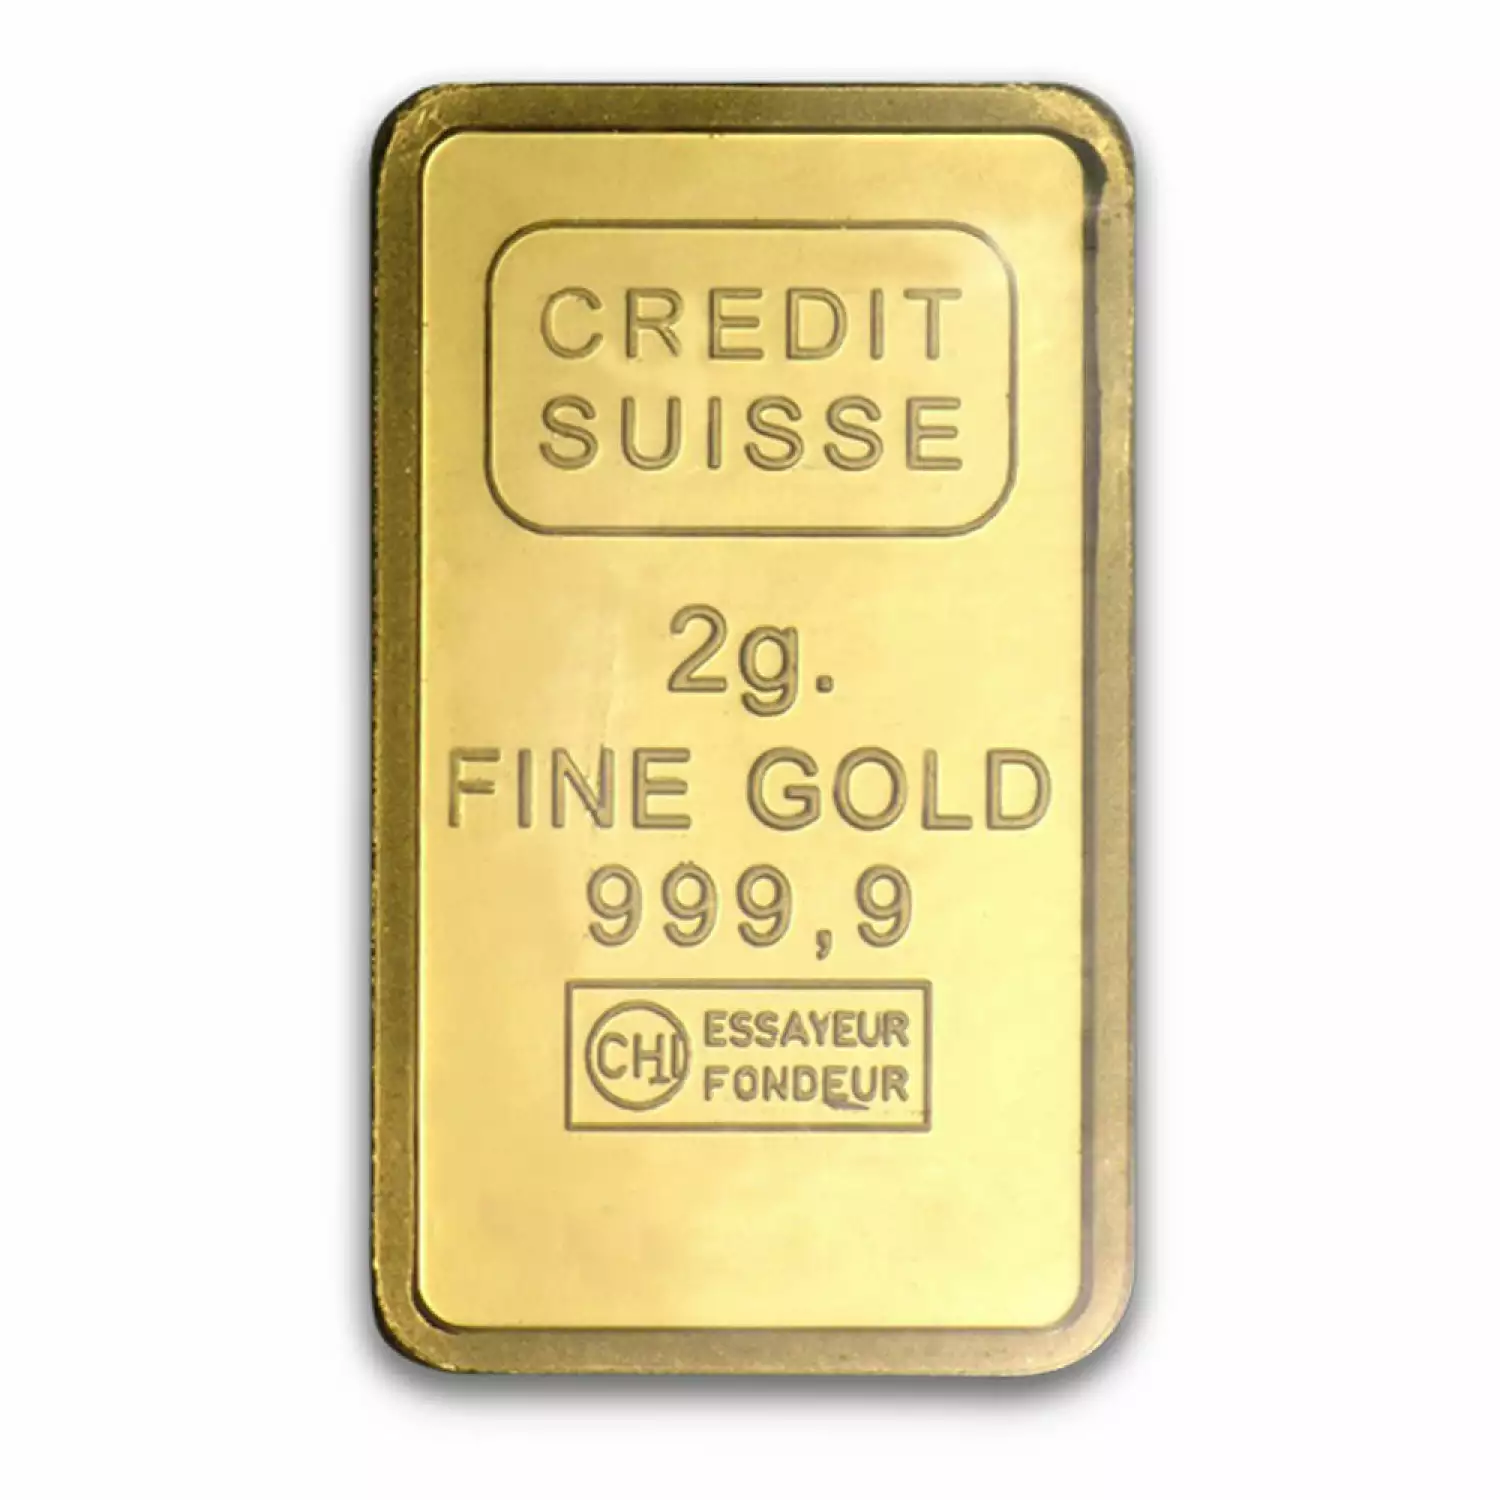 2g Credit Suisse Gold Liberty Bar (2)